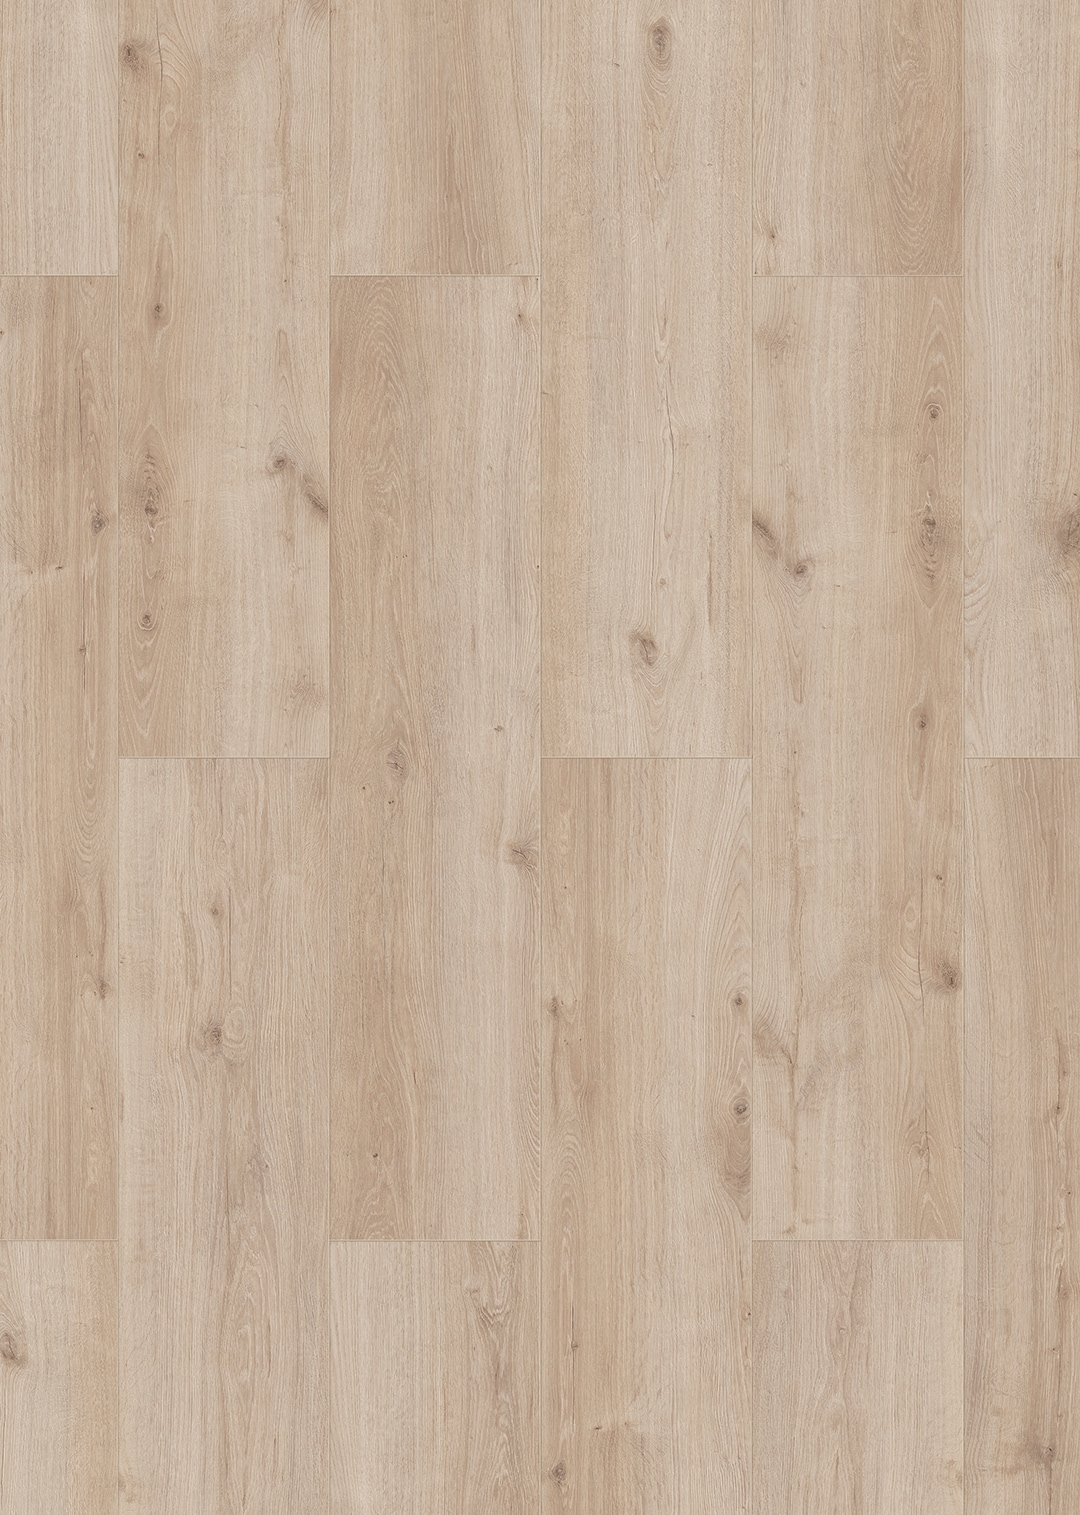 allen + roth Sierra Pale Oak 8-mm T x 8-in W x 50-in L Water Resistant Wood Plank Laminate Flooring (23.92-sq ft) in Gray | 56097